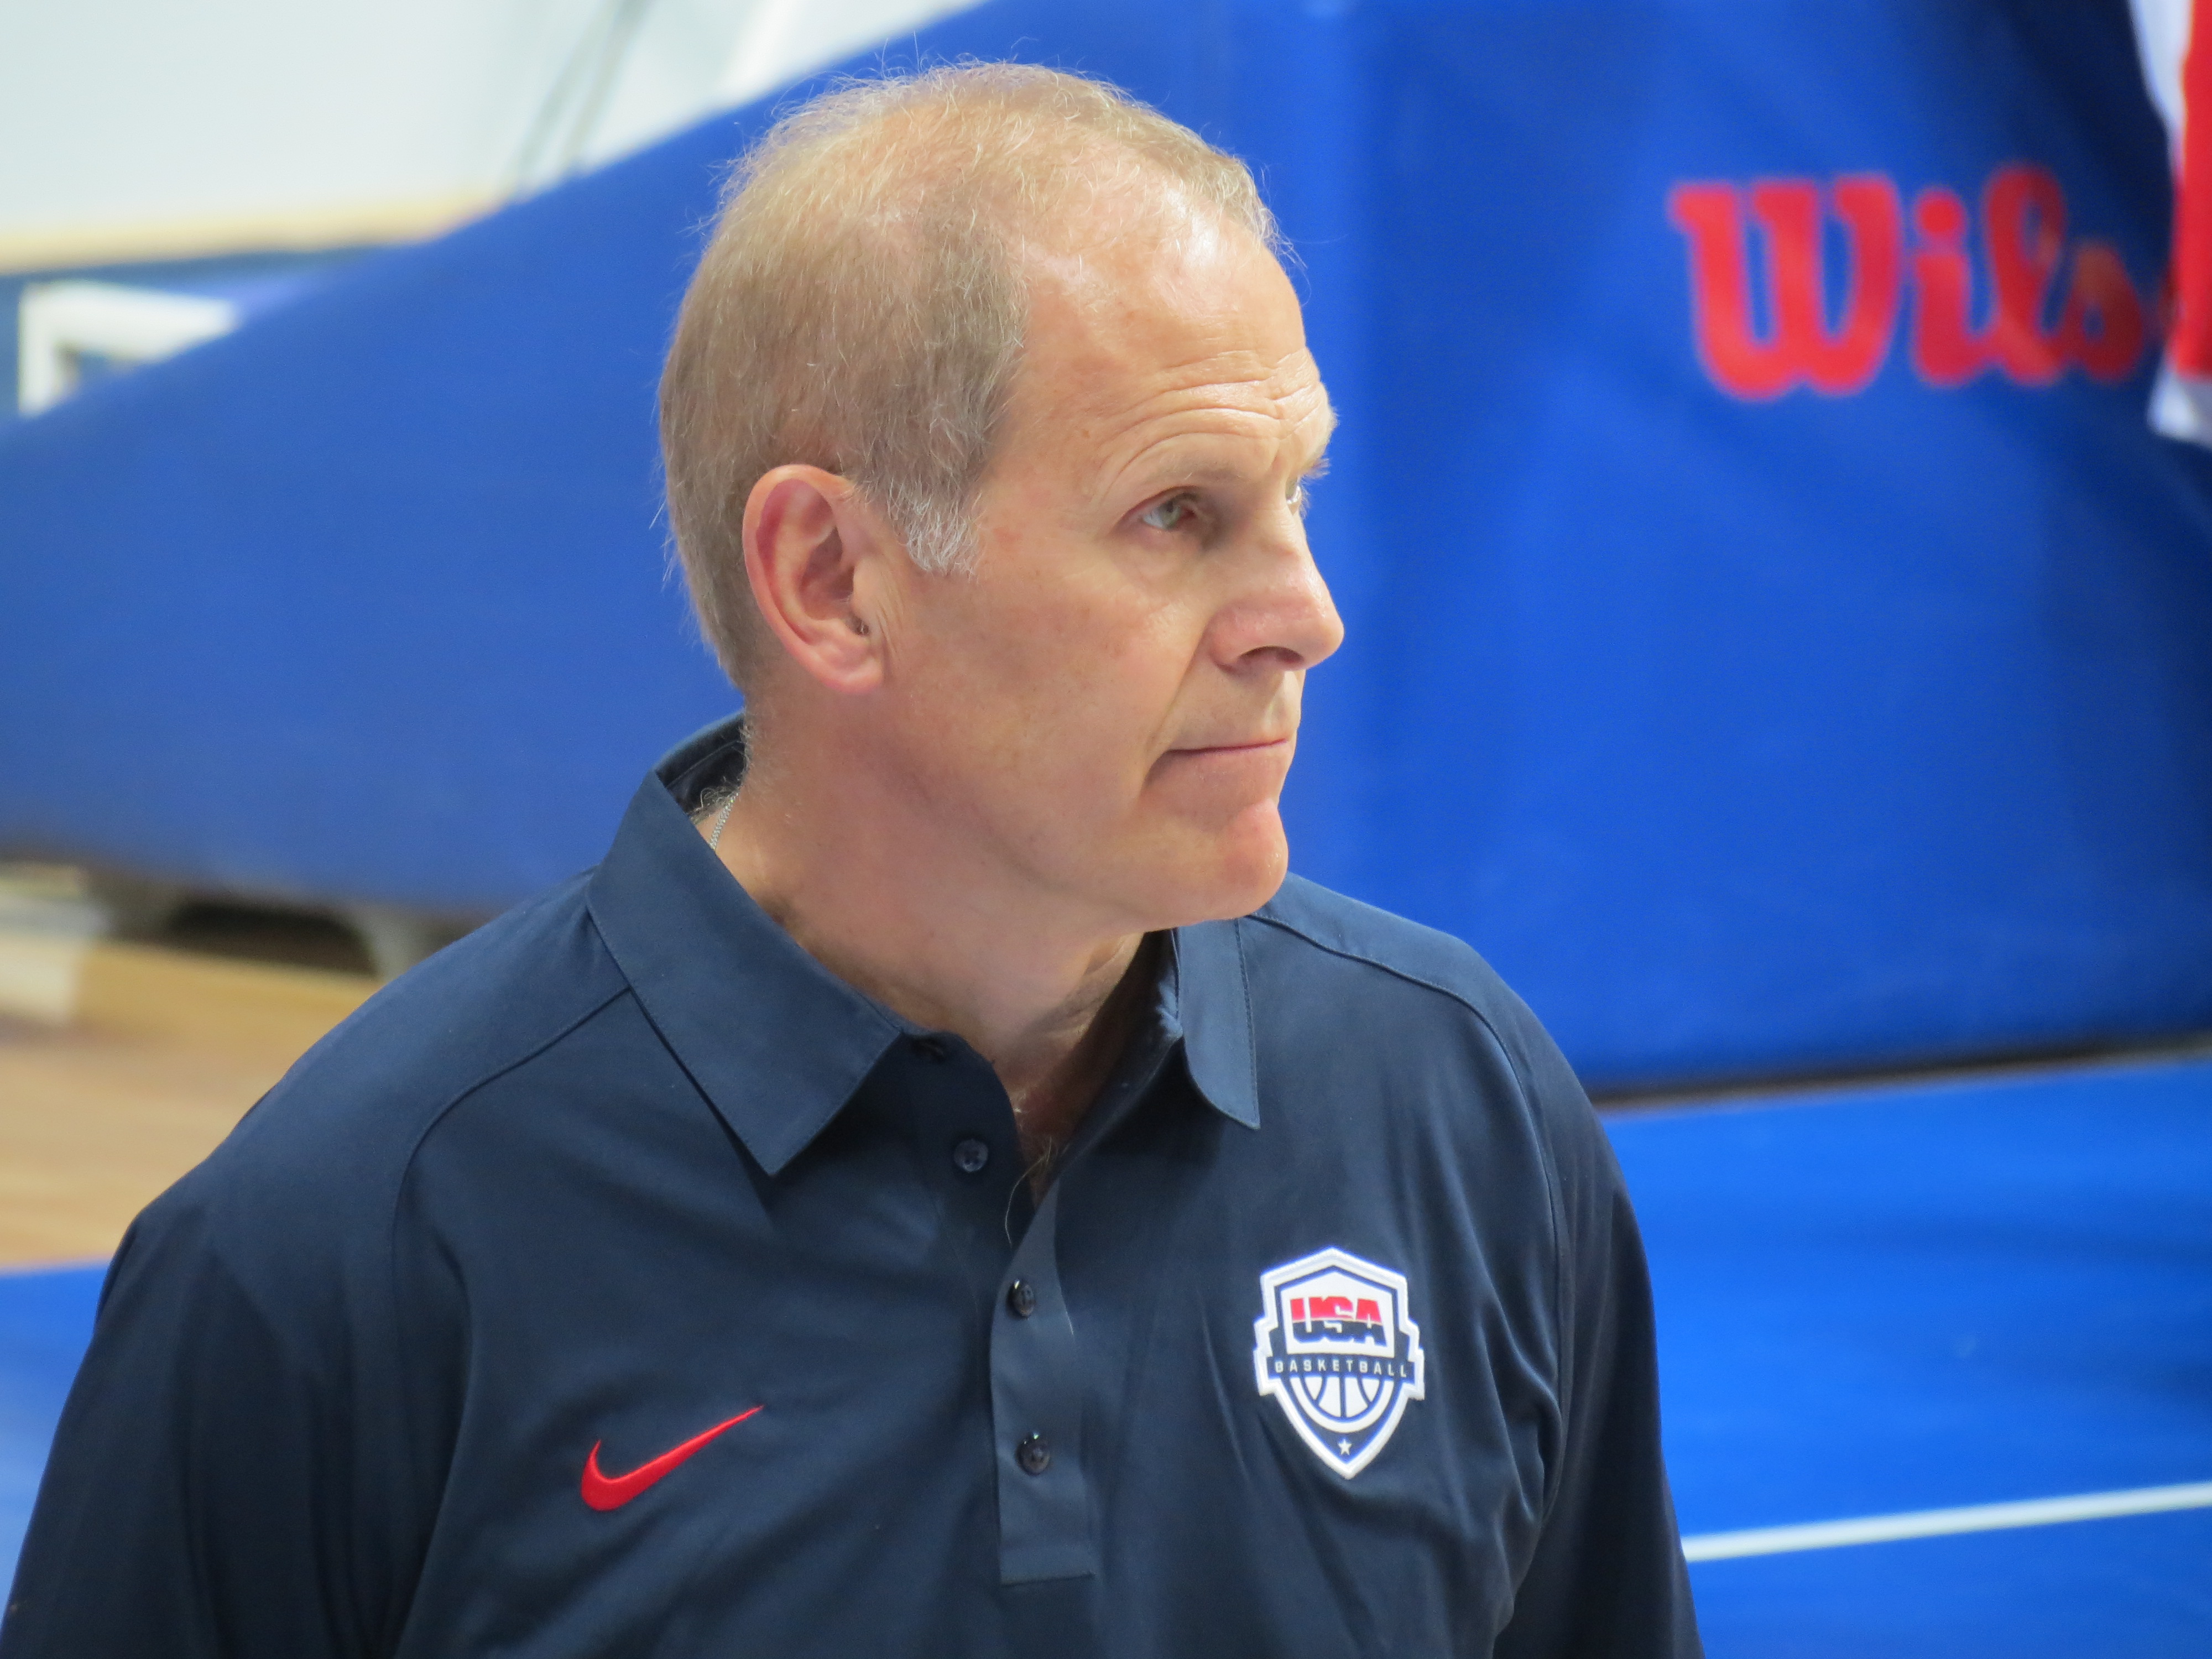 USA Basketball’s Beilein talks Universiade and Michigan | Tidcombe Sports